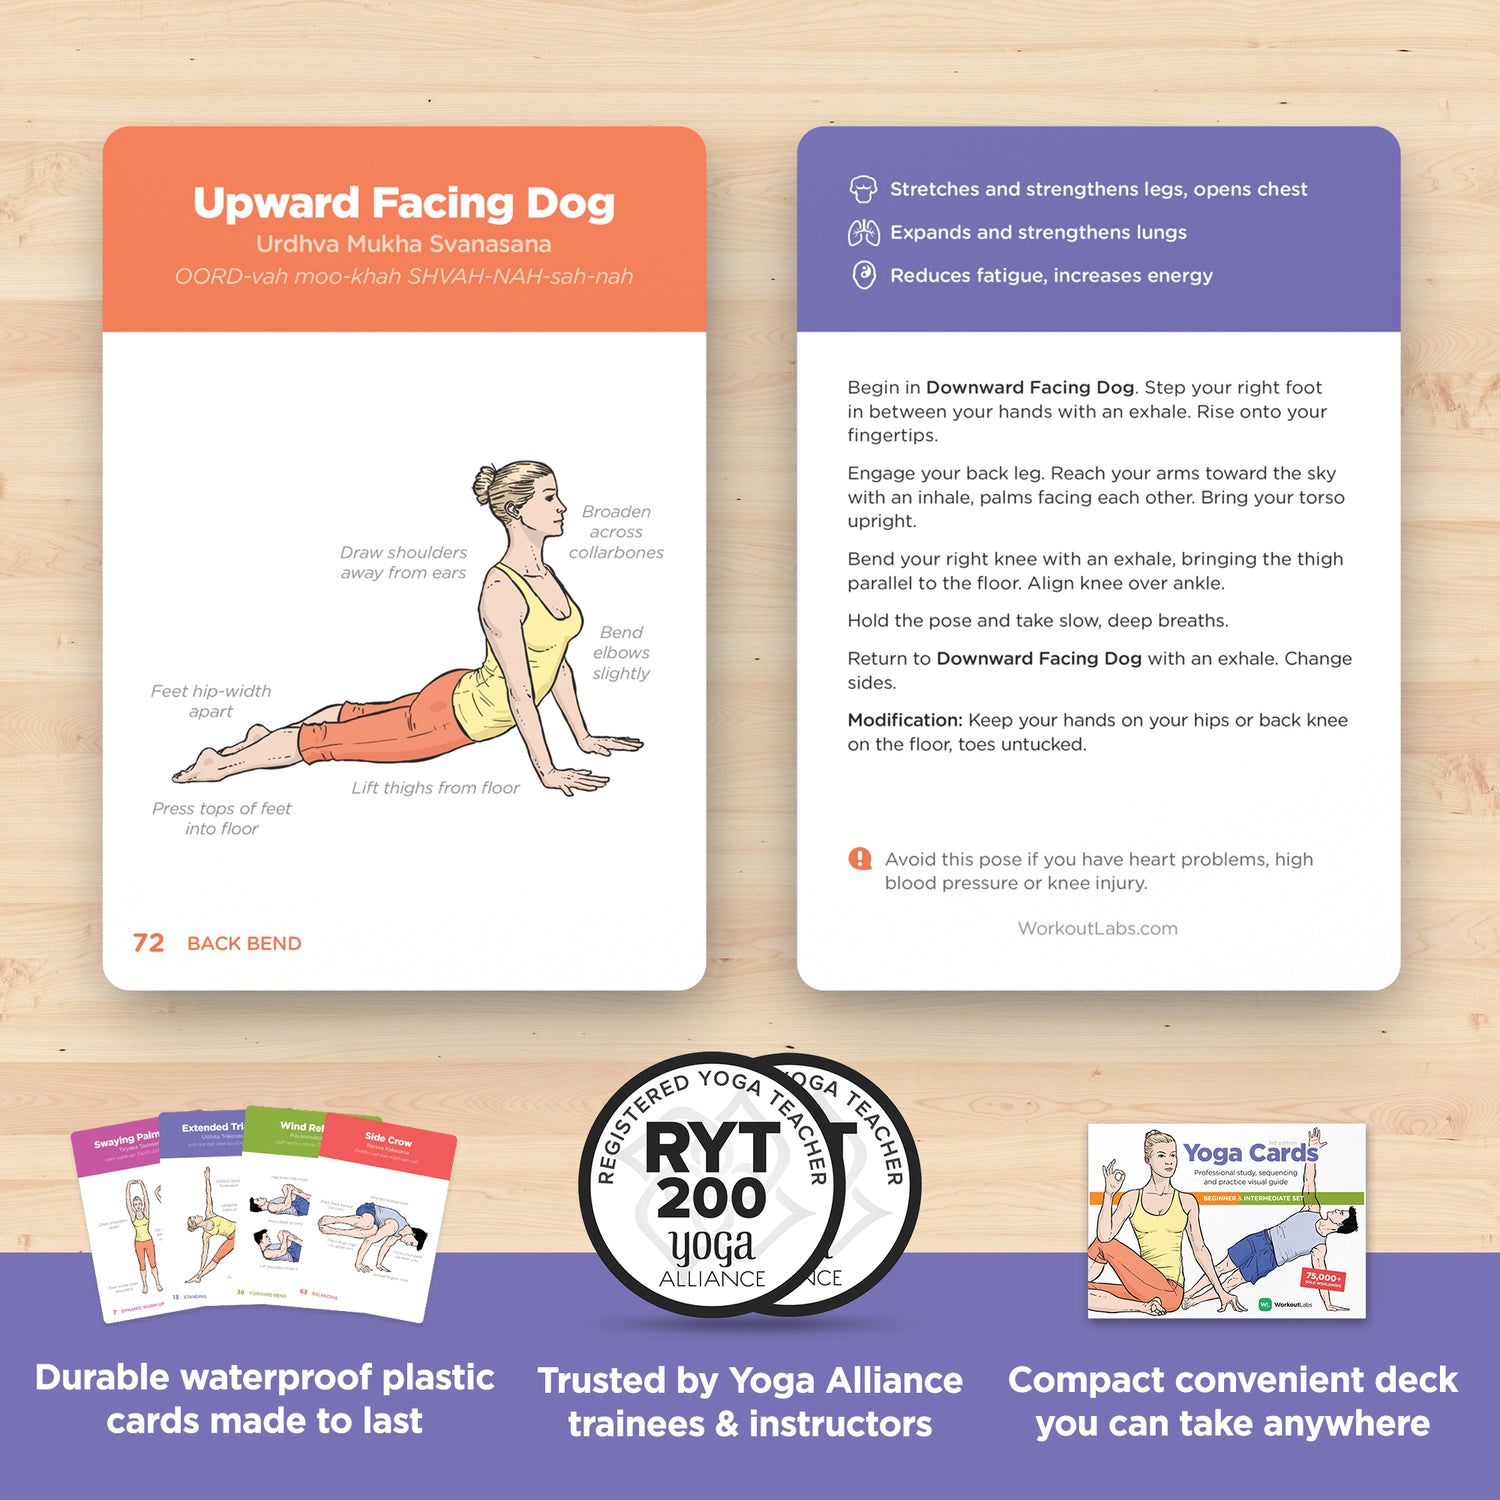  WorkoutLabs Yoga Cards – Beginner: Visual Study